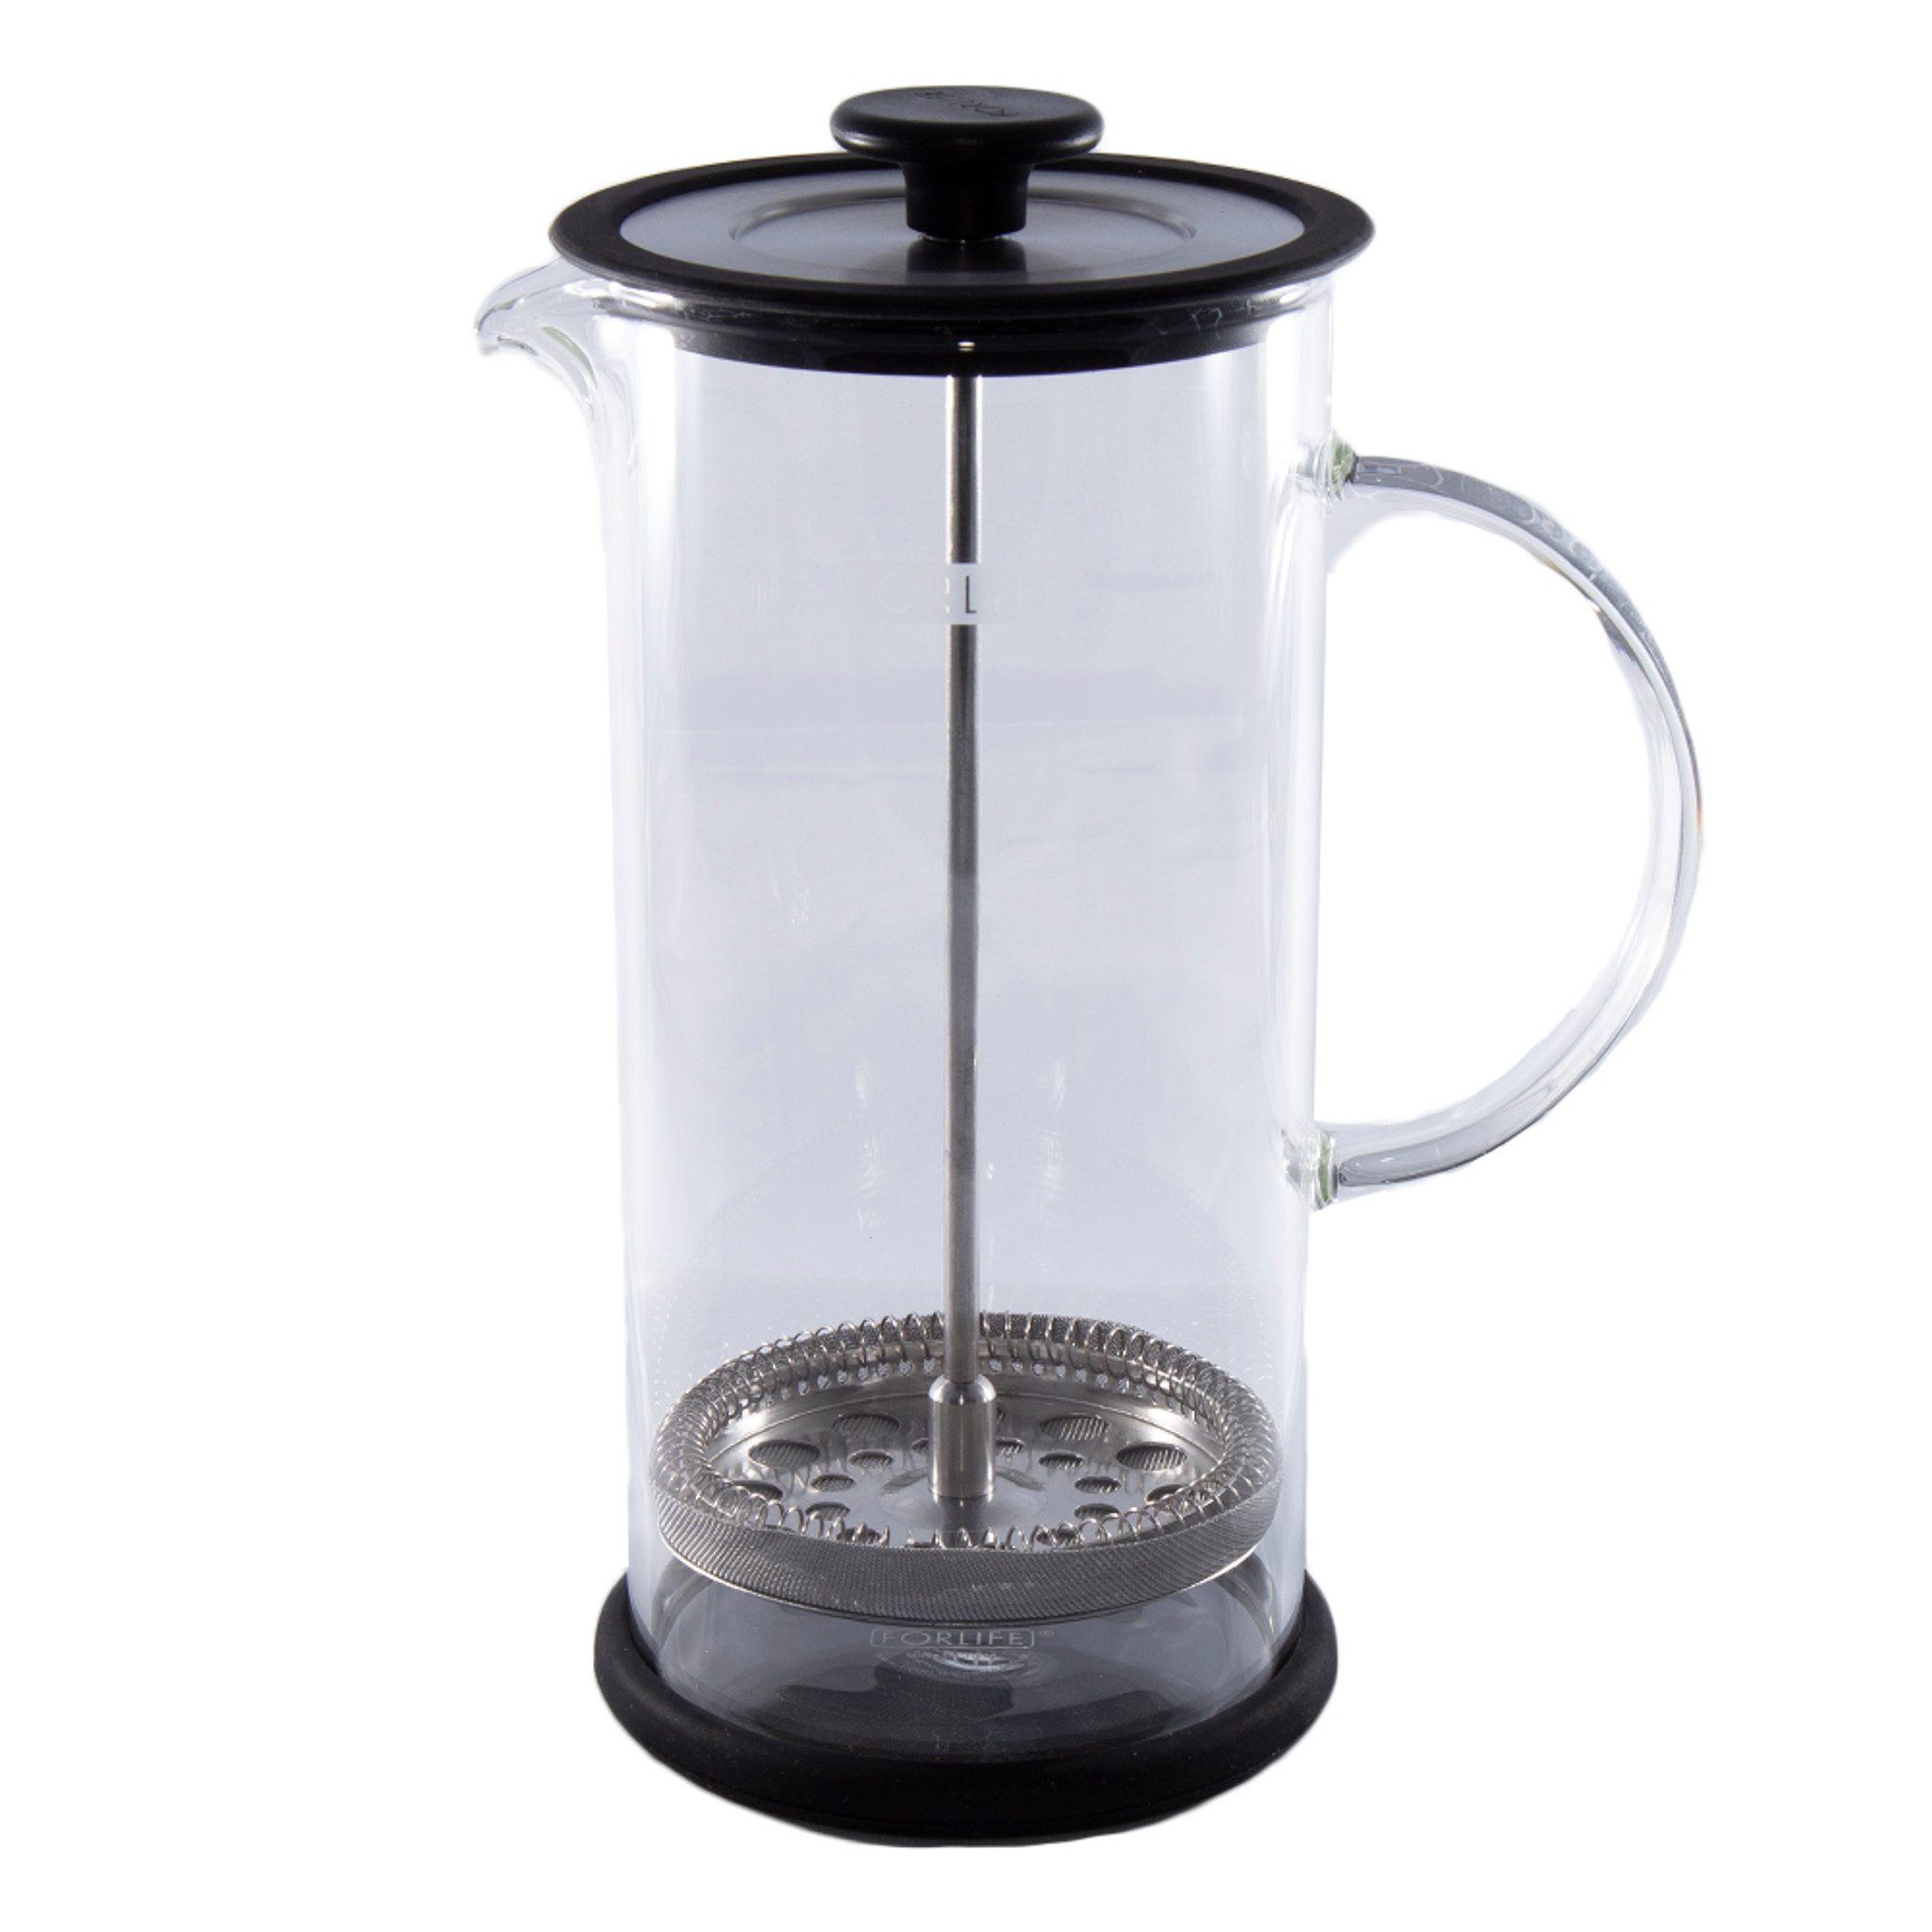 Cafe - Glass Tea Press - The Tea Smith